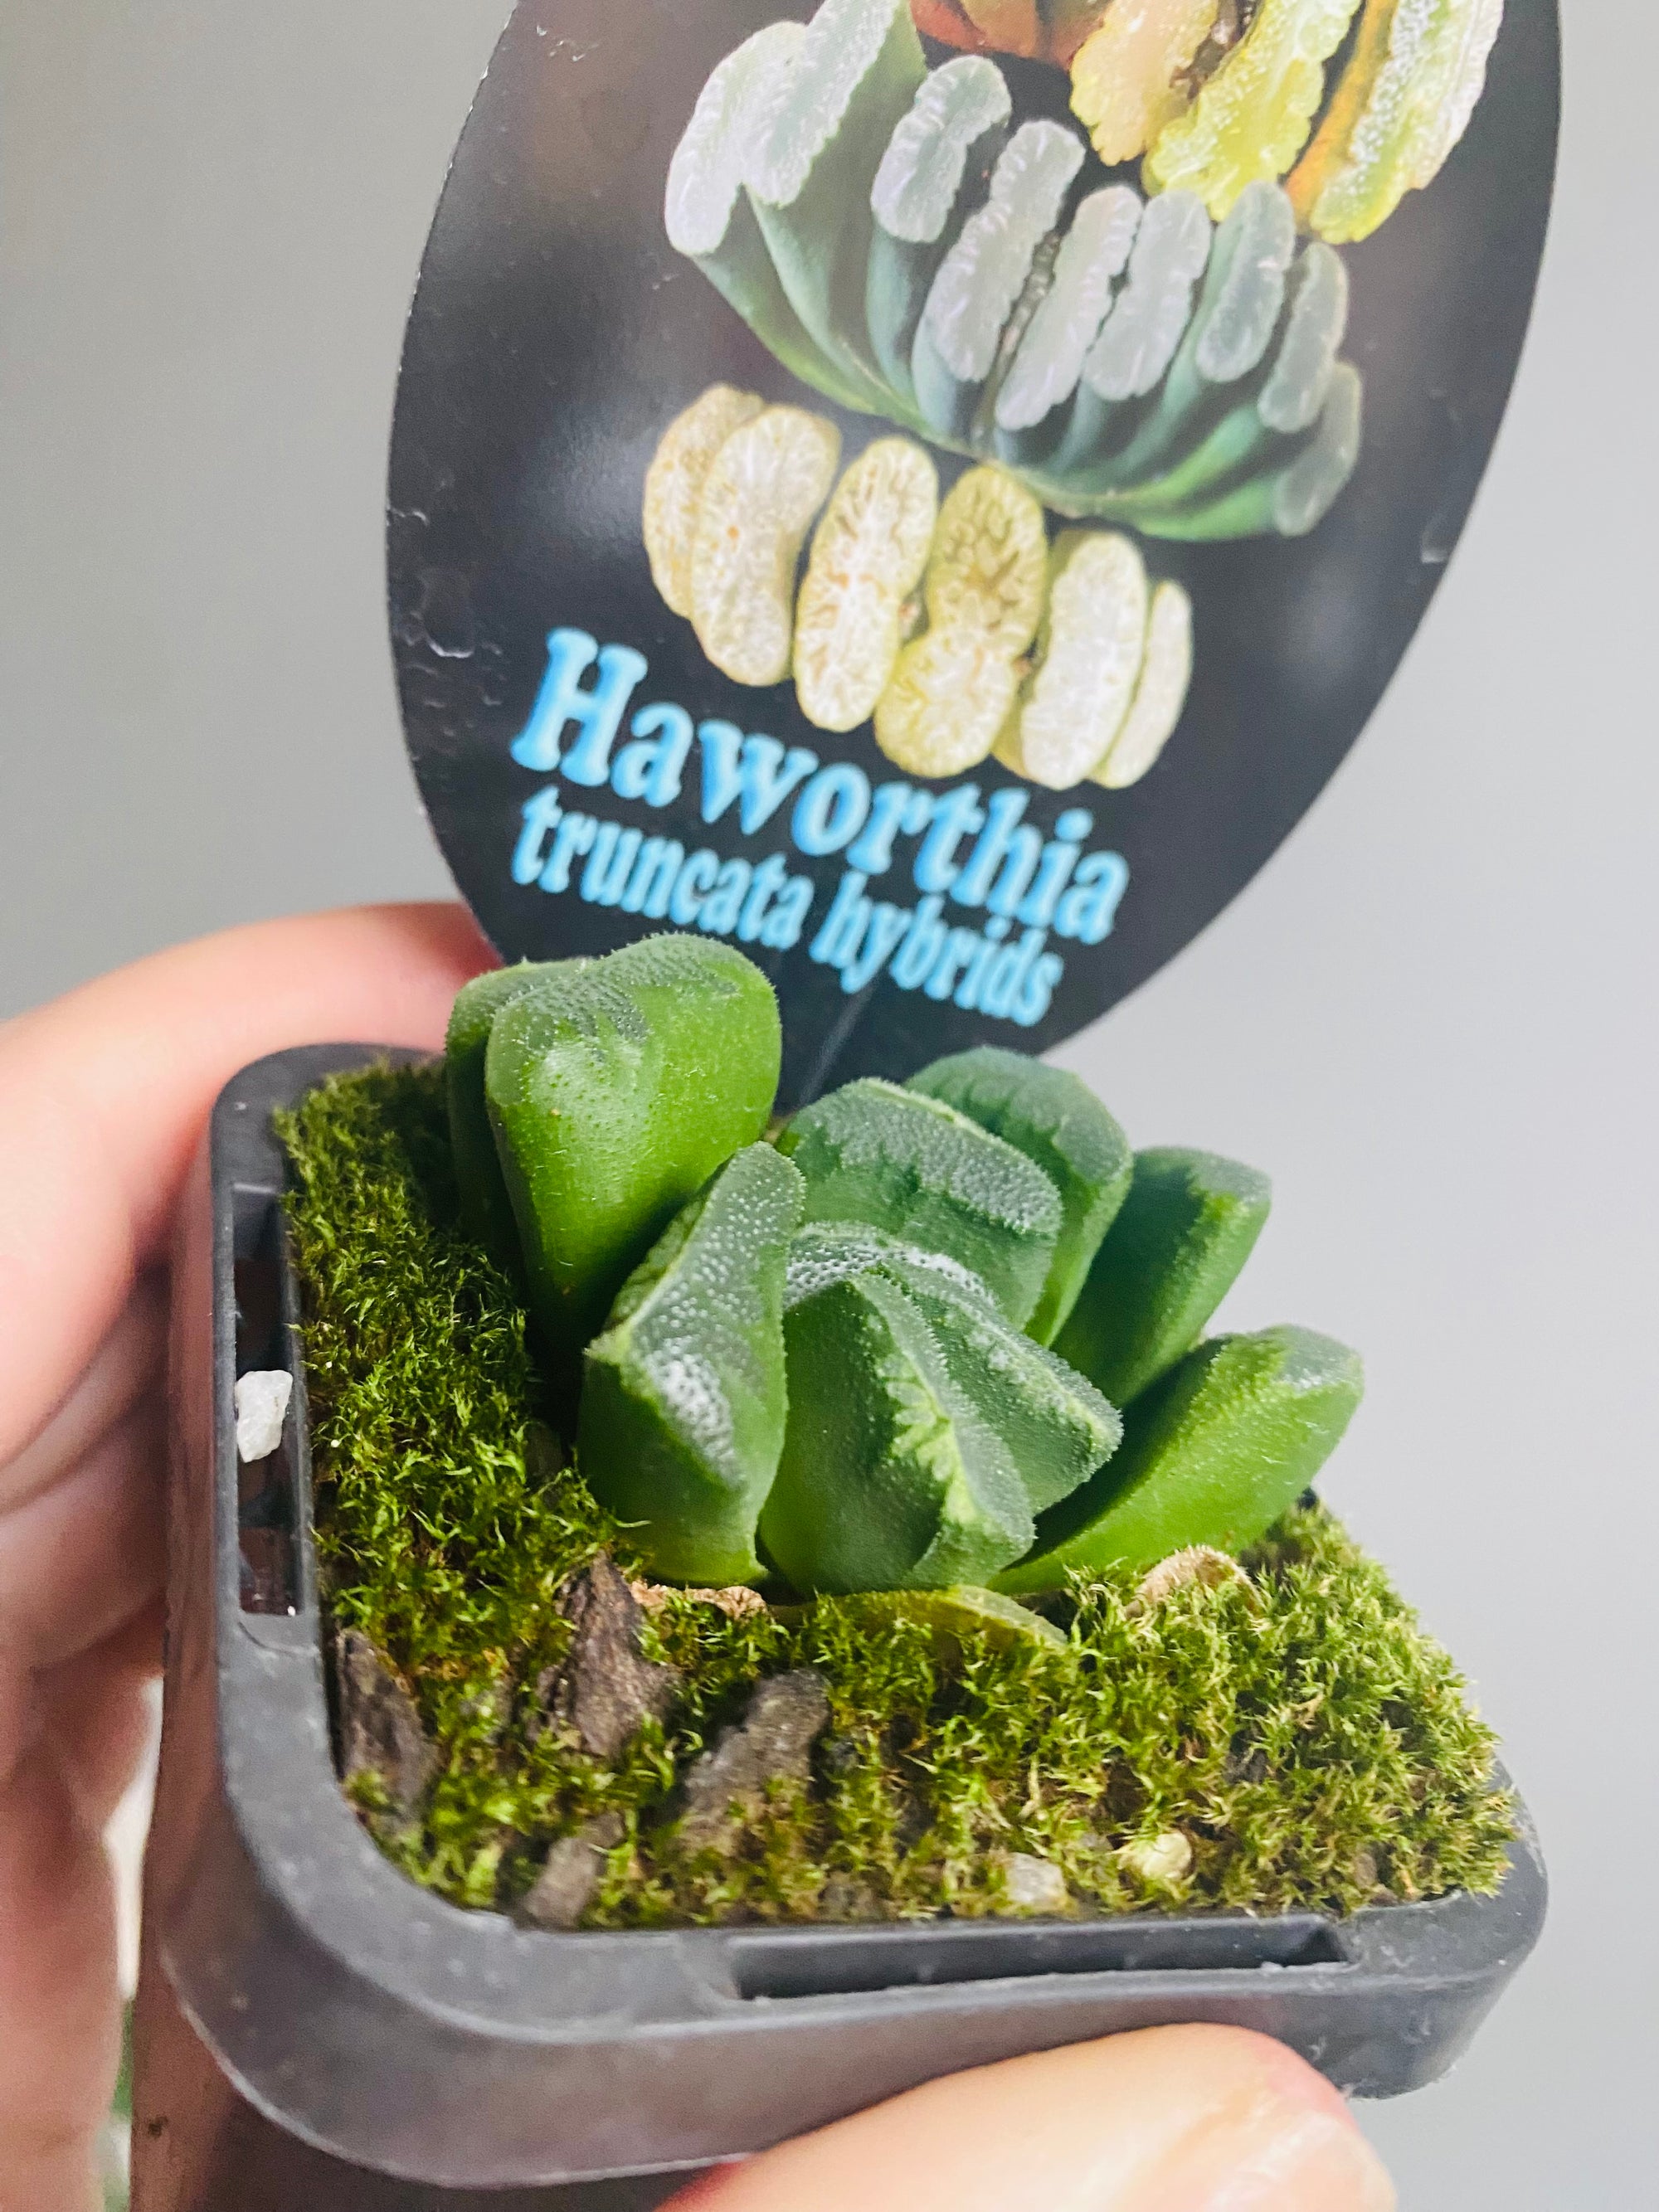 Haworthia truncata hybrid